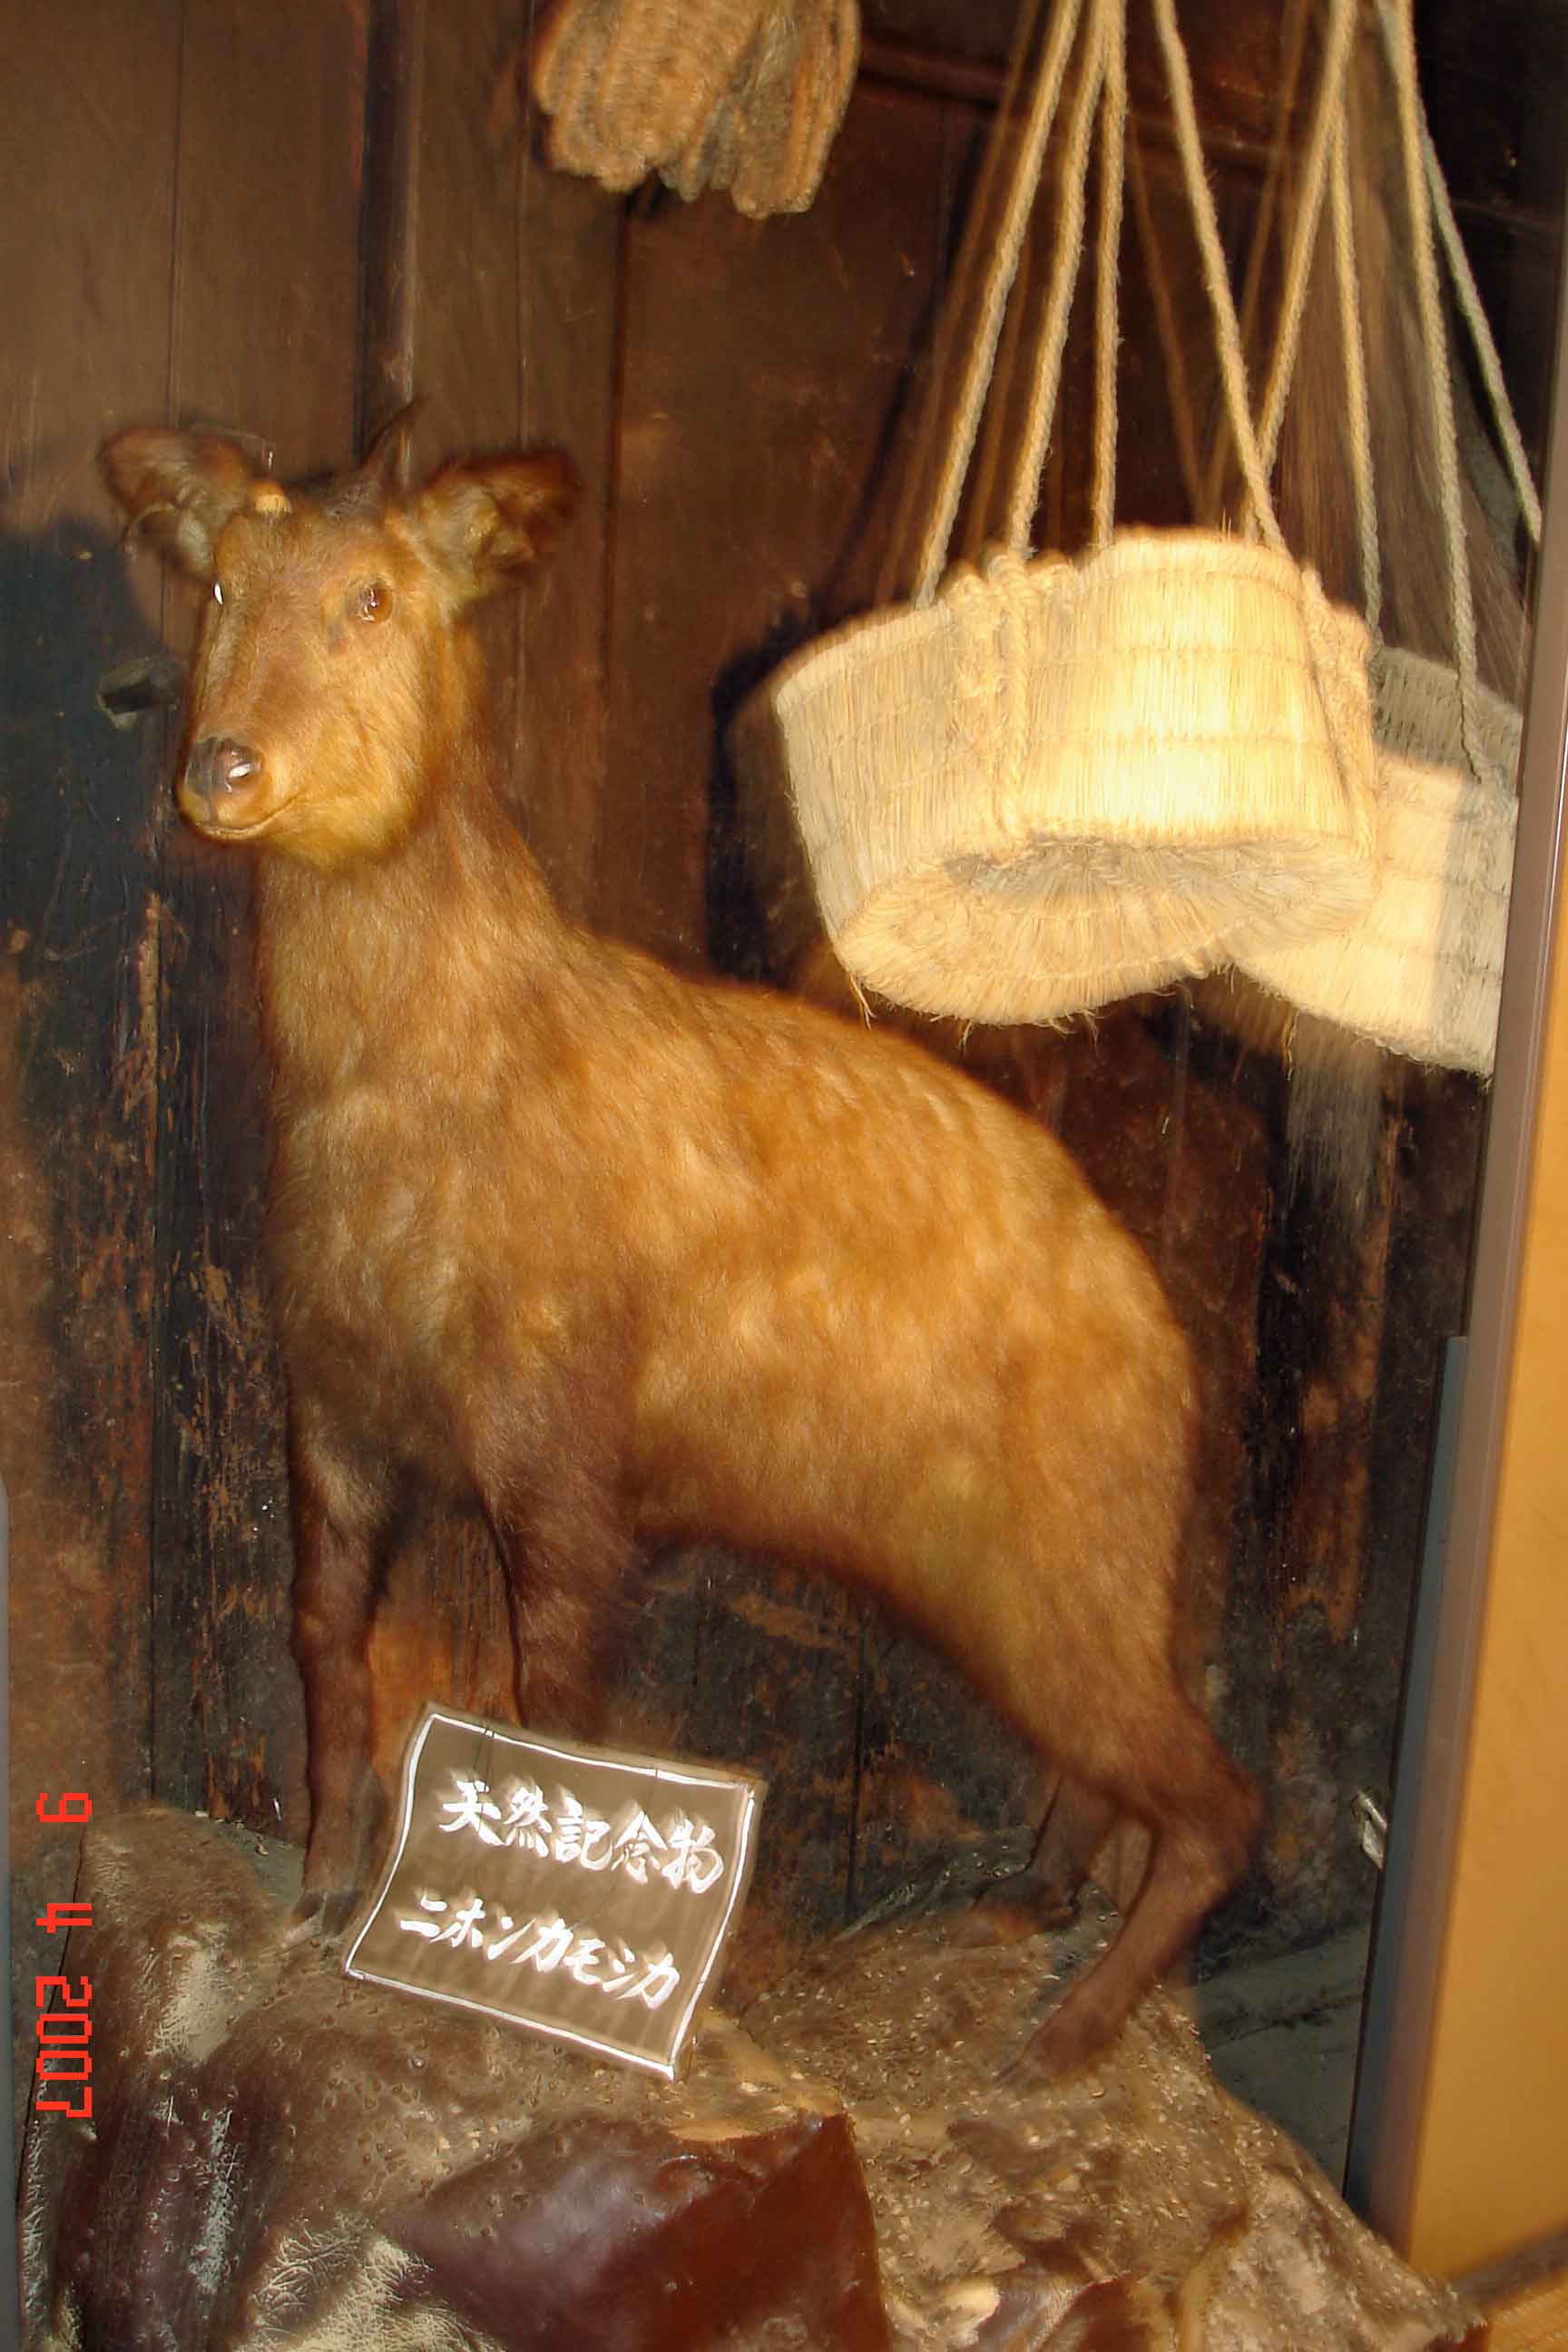 Japanese Deer "Shika" or "Sika" native to the region